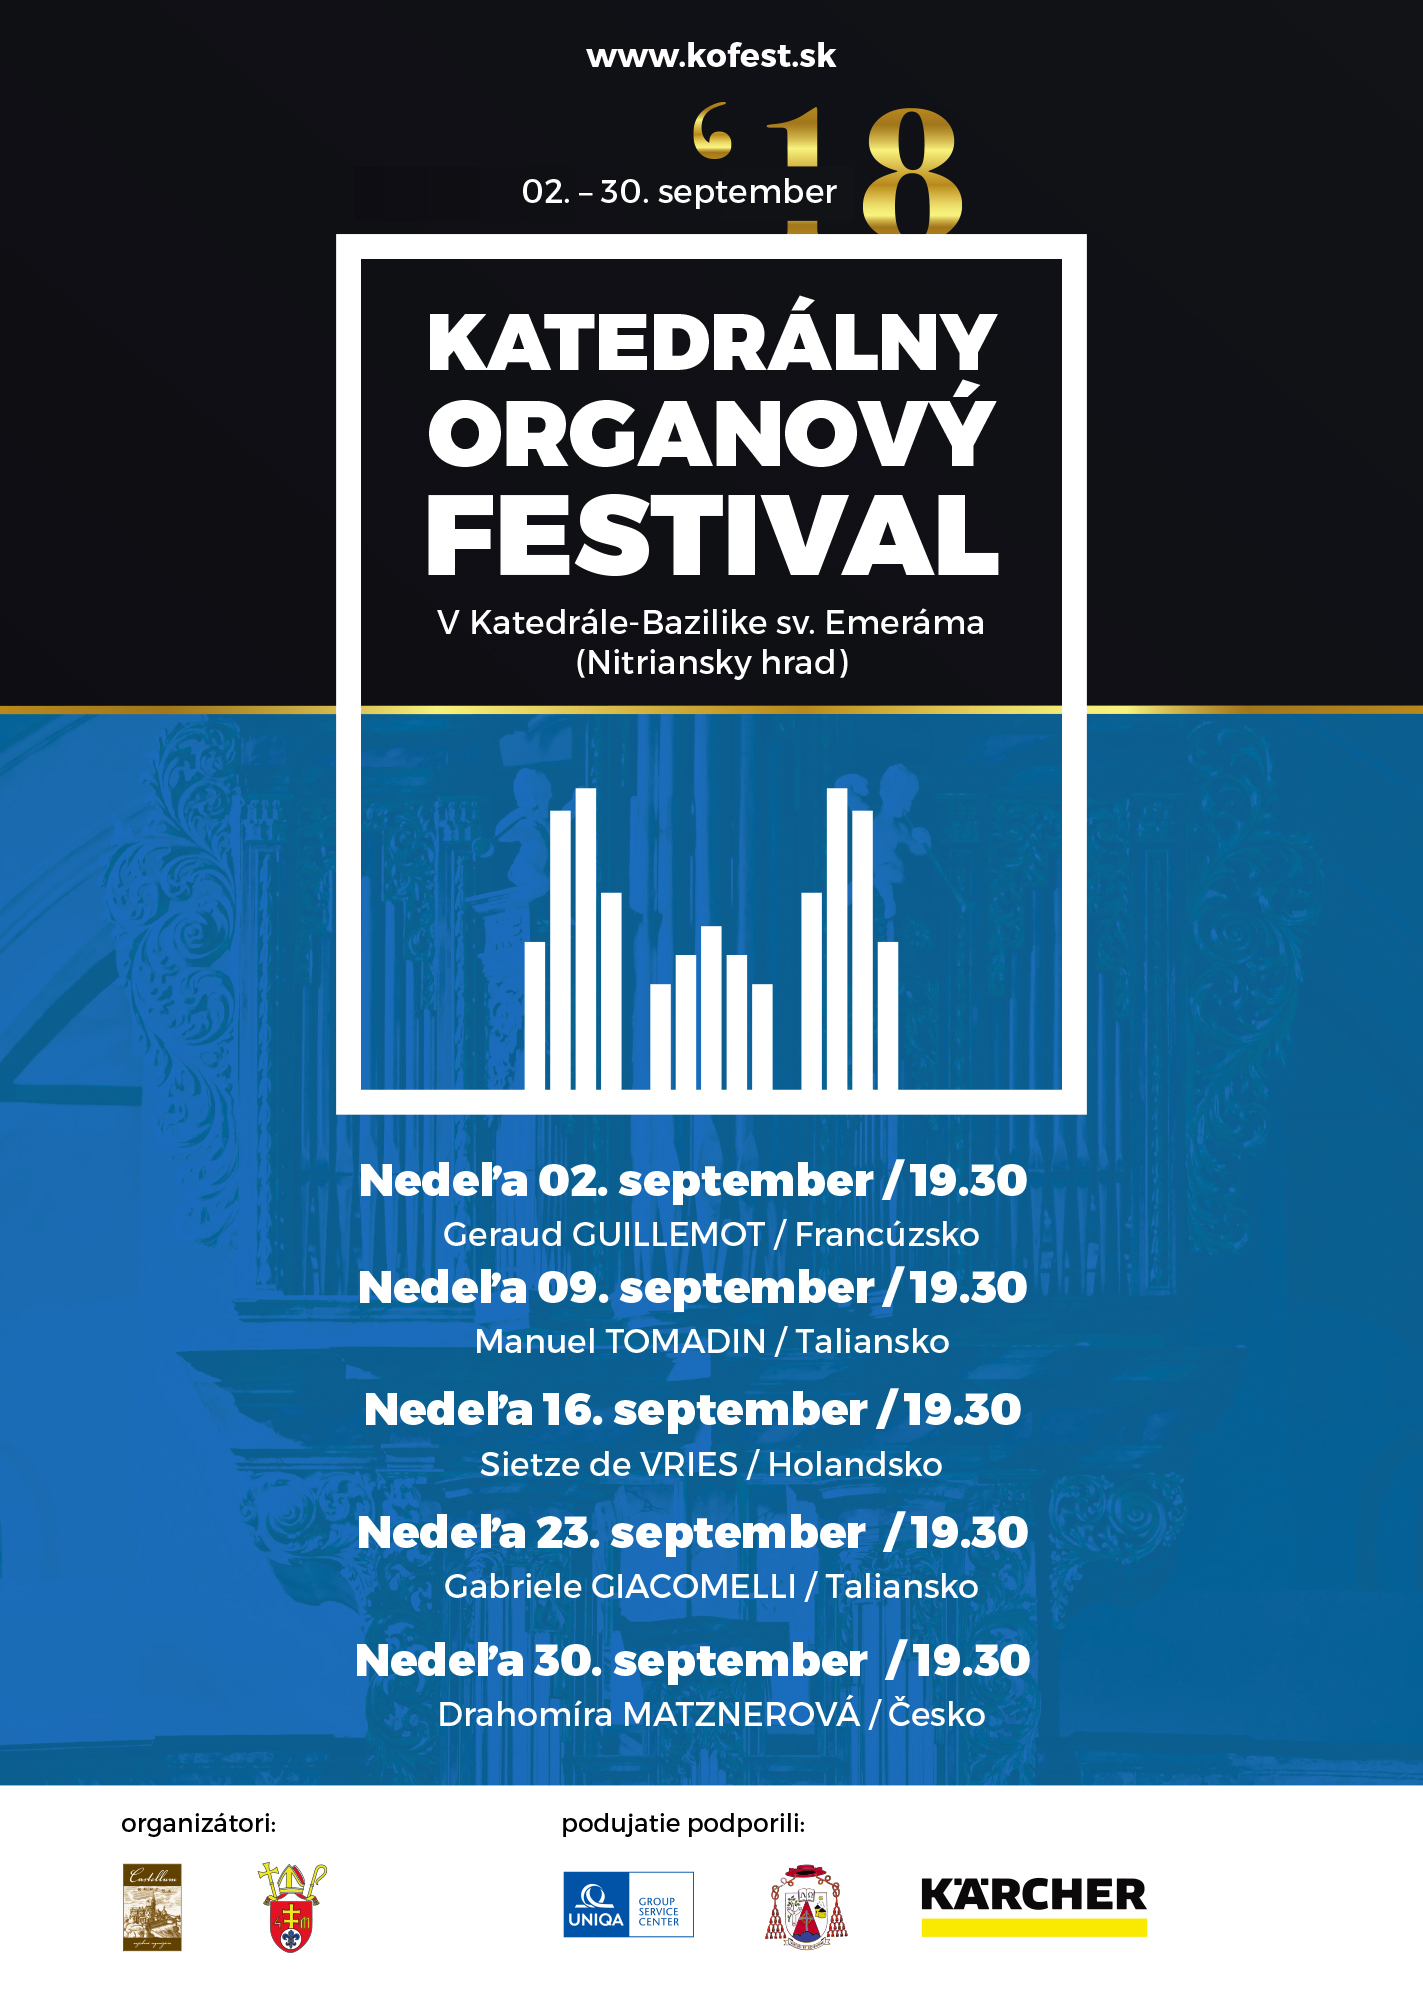 Katedrálny organový festival 2018